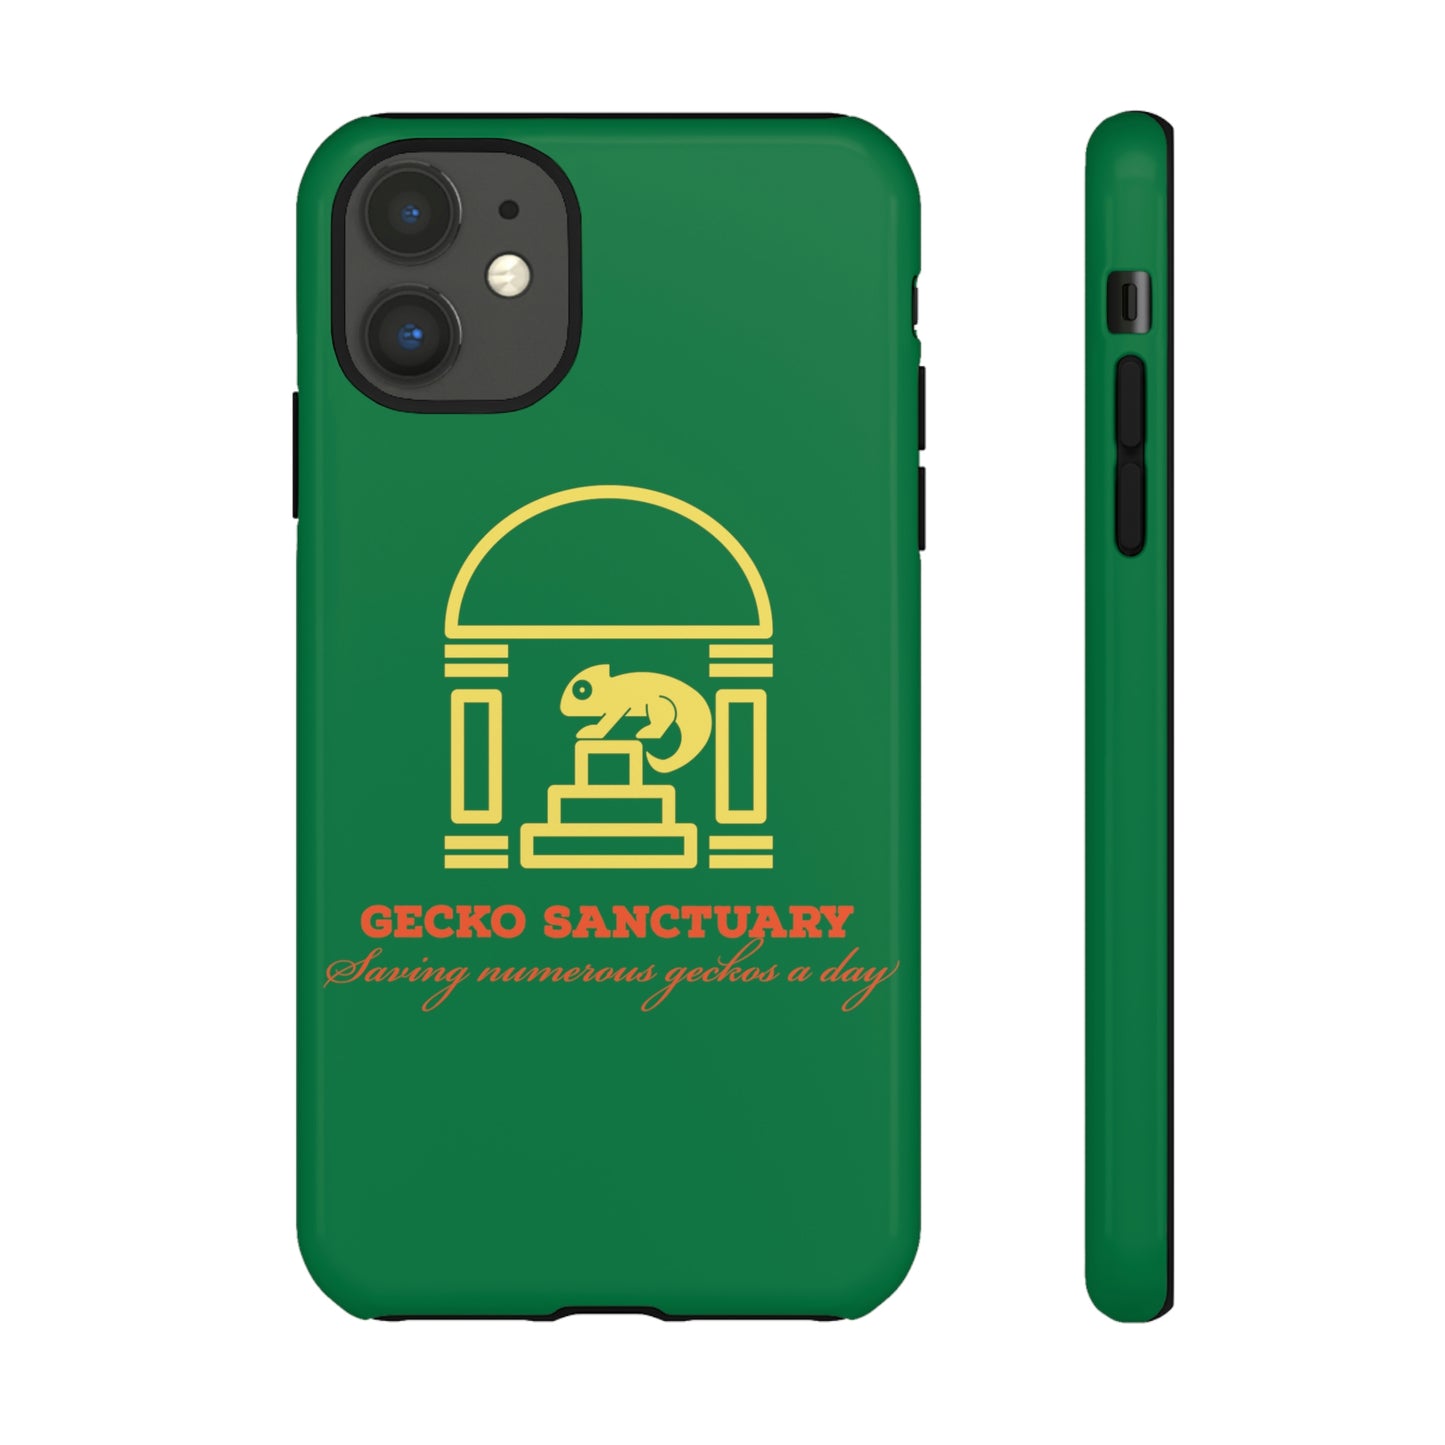 Gecko Sanctuary Phone Case